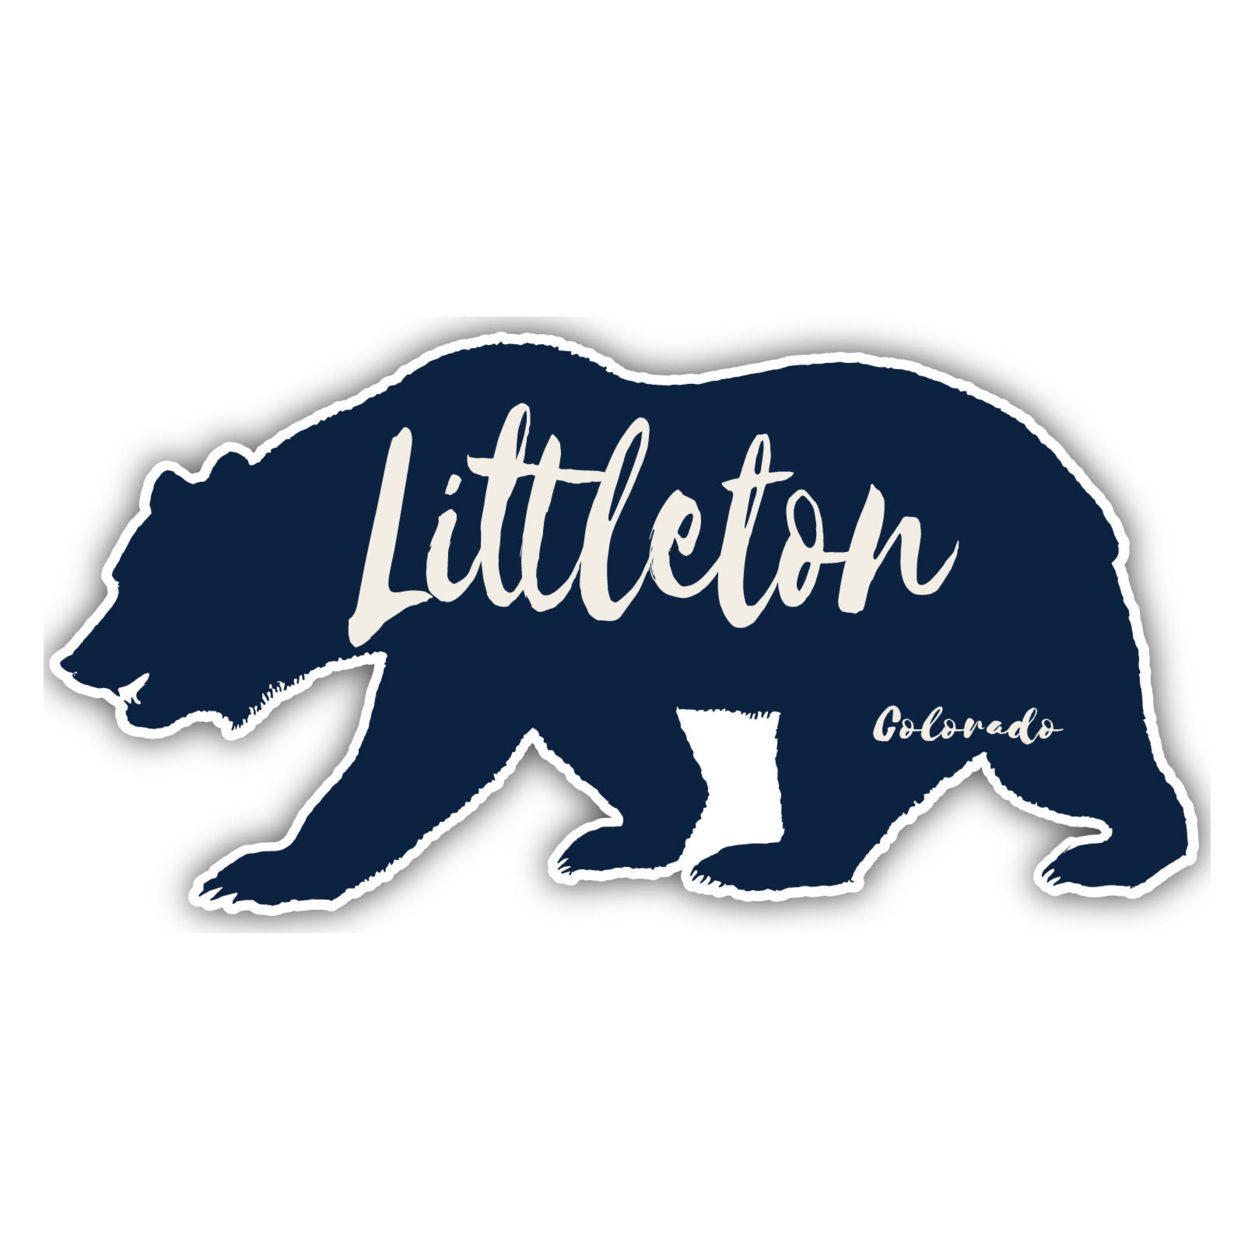 Littleton Colorado Souvenir Decorative Stickers (Choose Theme And Size) - 4-Inch, Tent